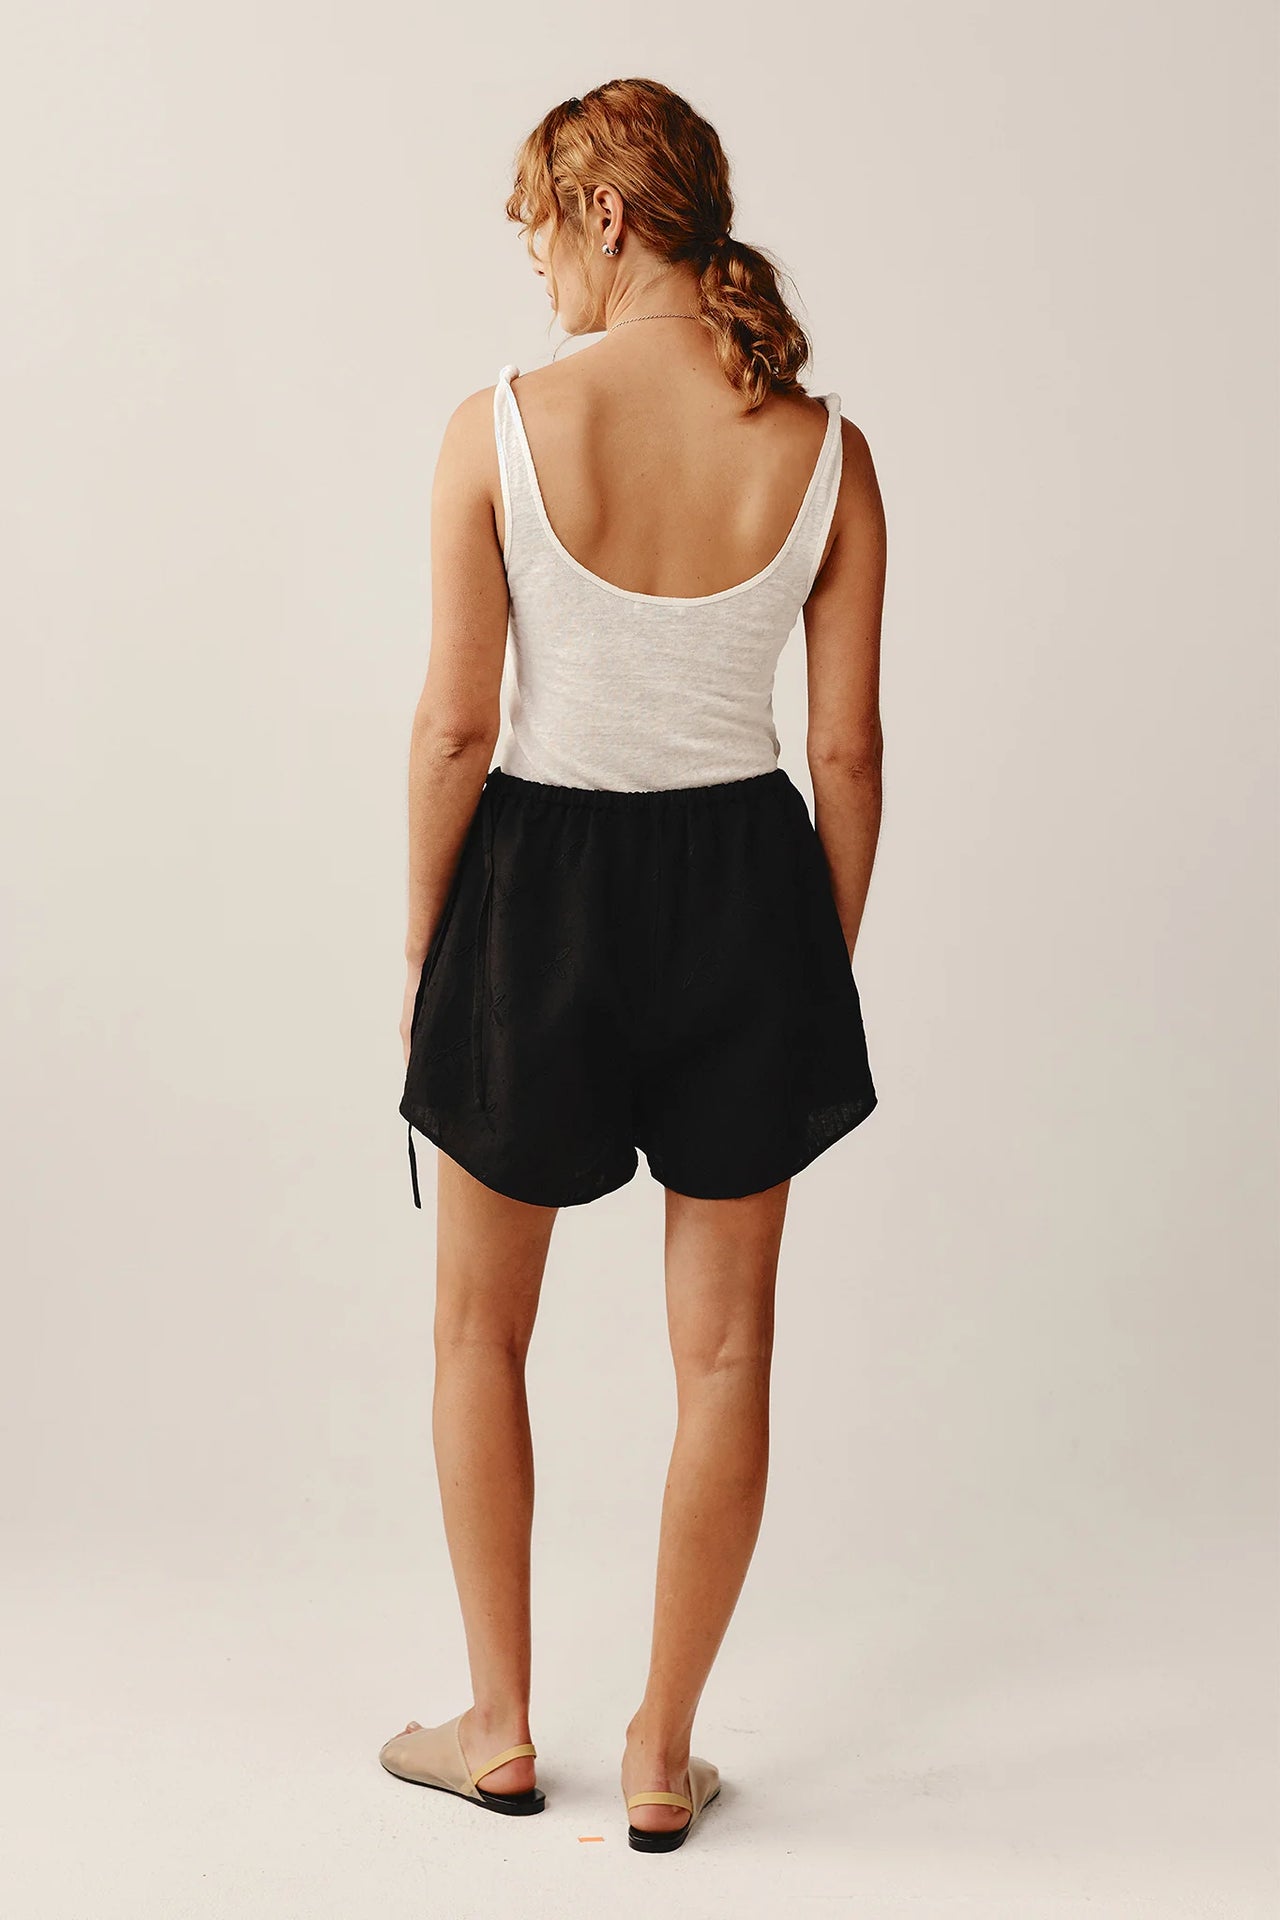 Silla Shorts - Black Embroidery